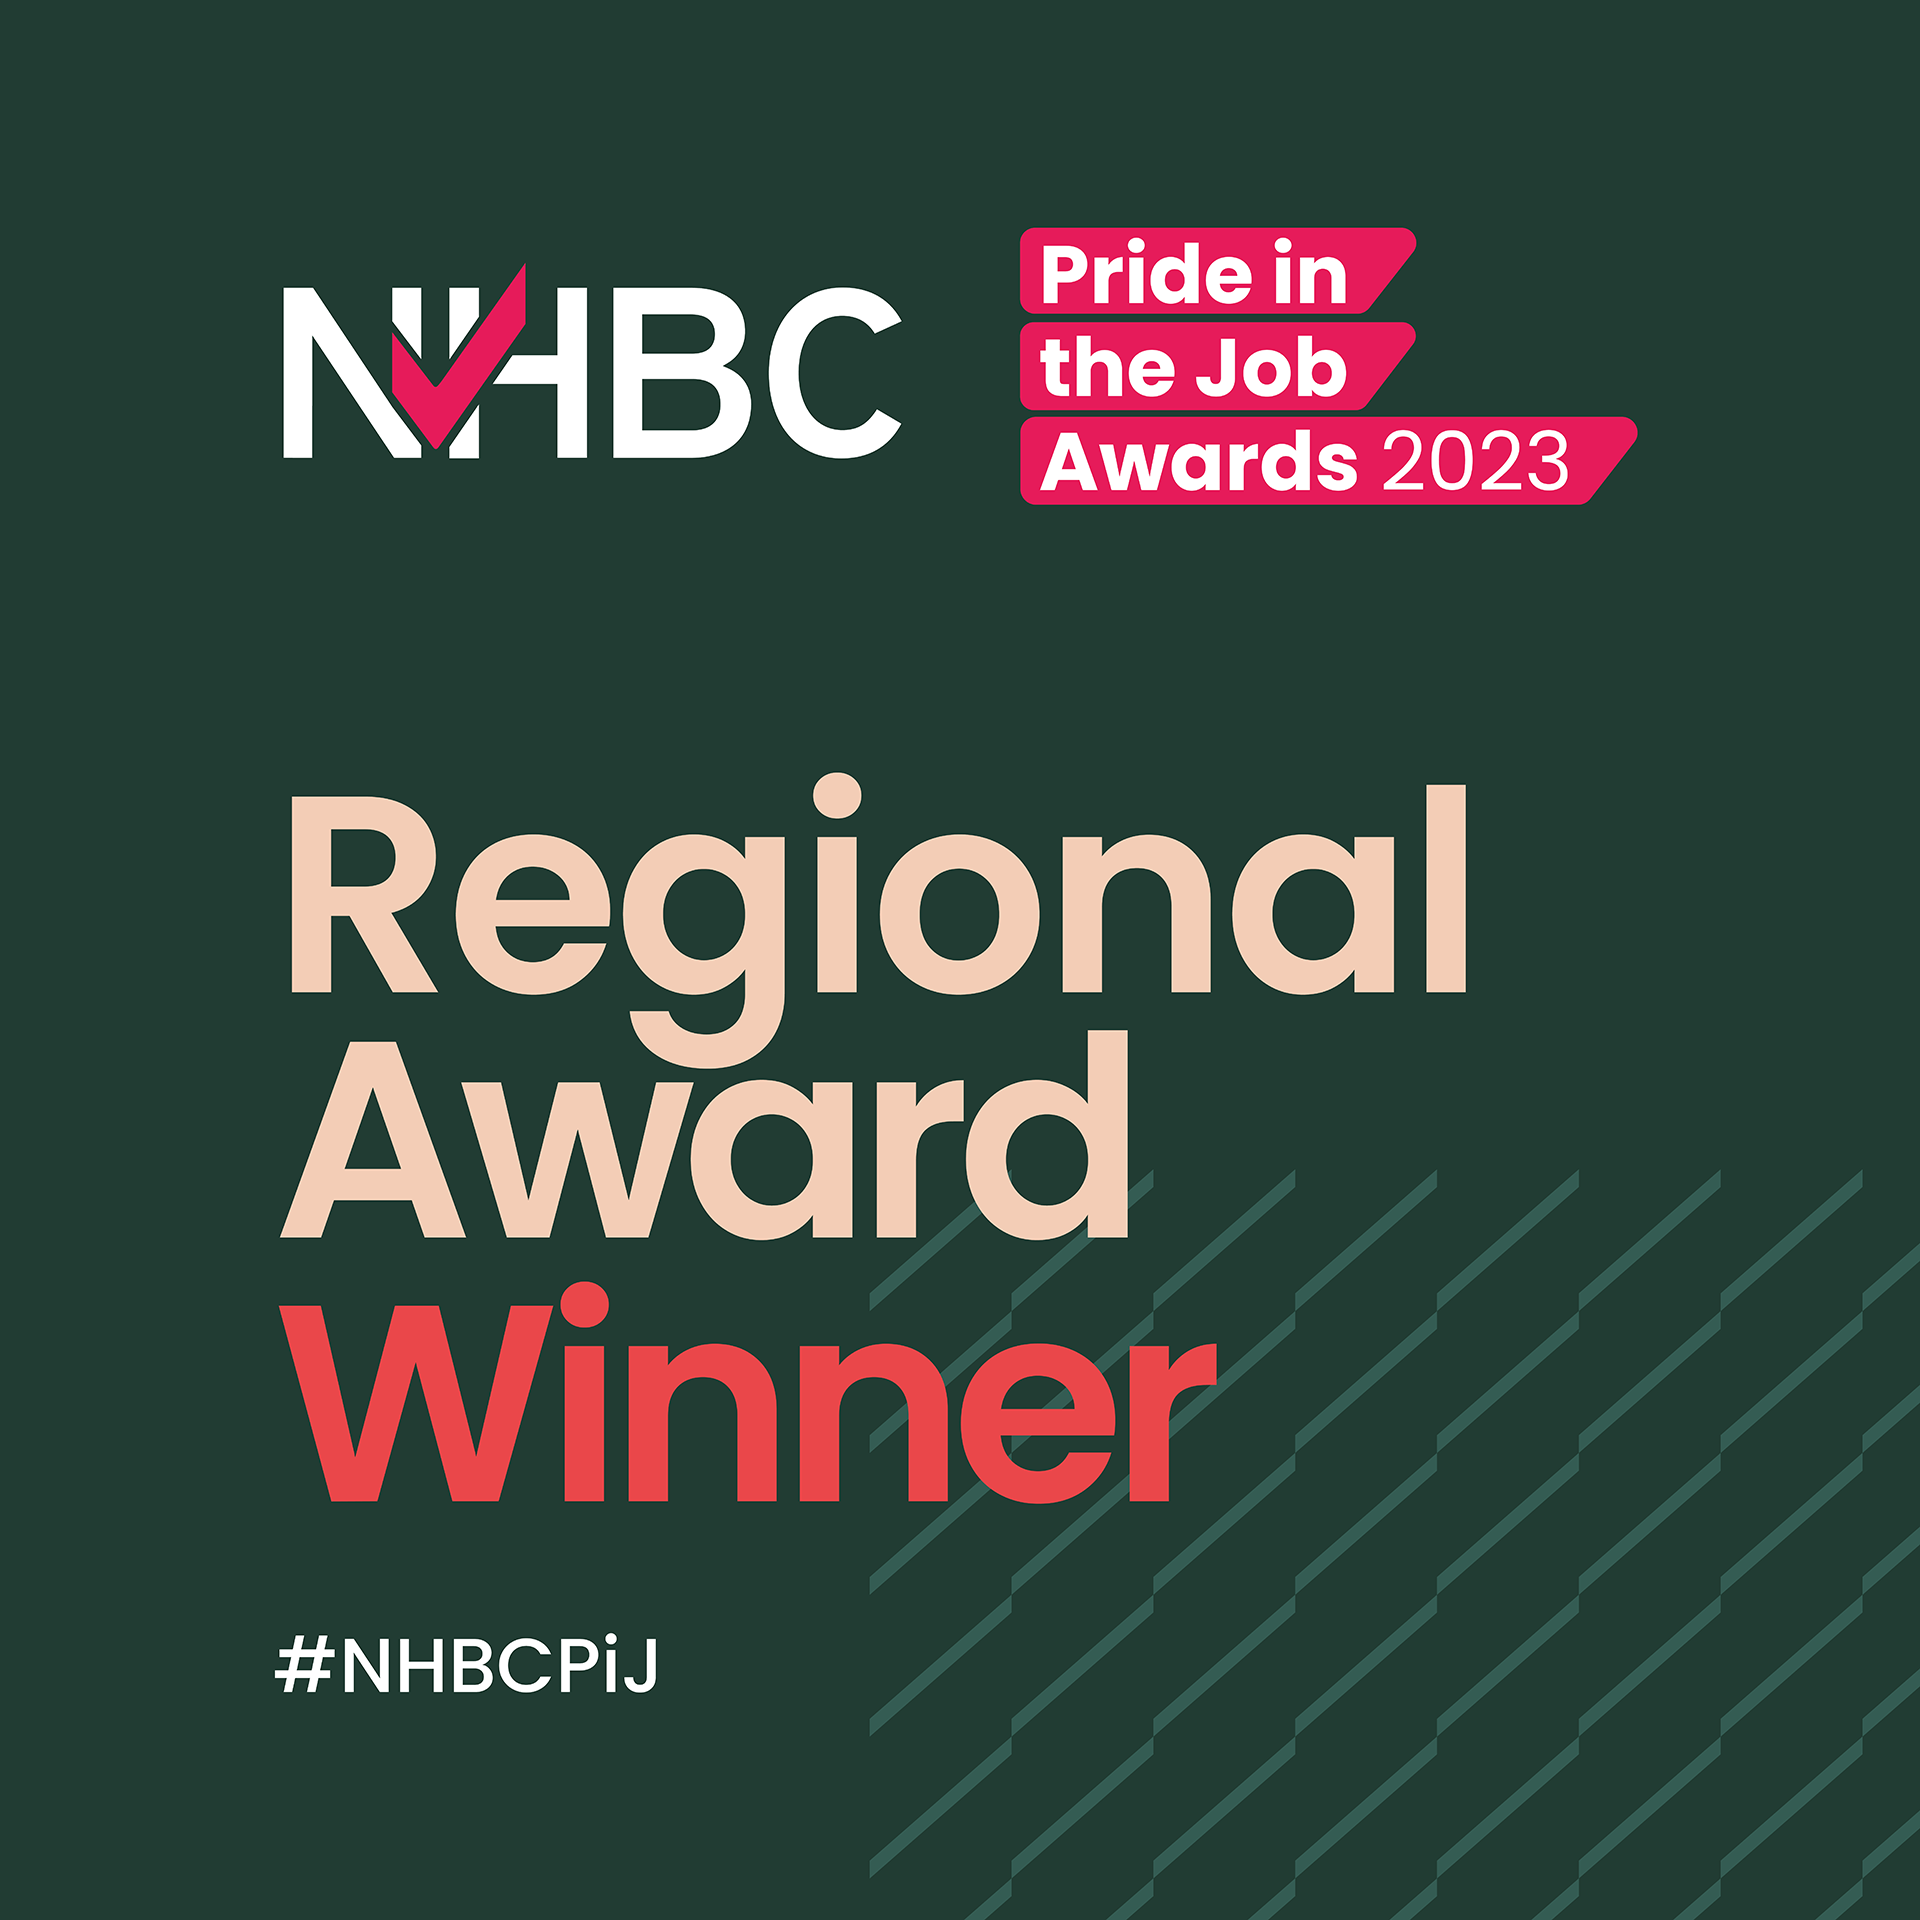 NHBC Regional Award Winner 2023